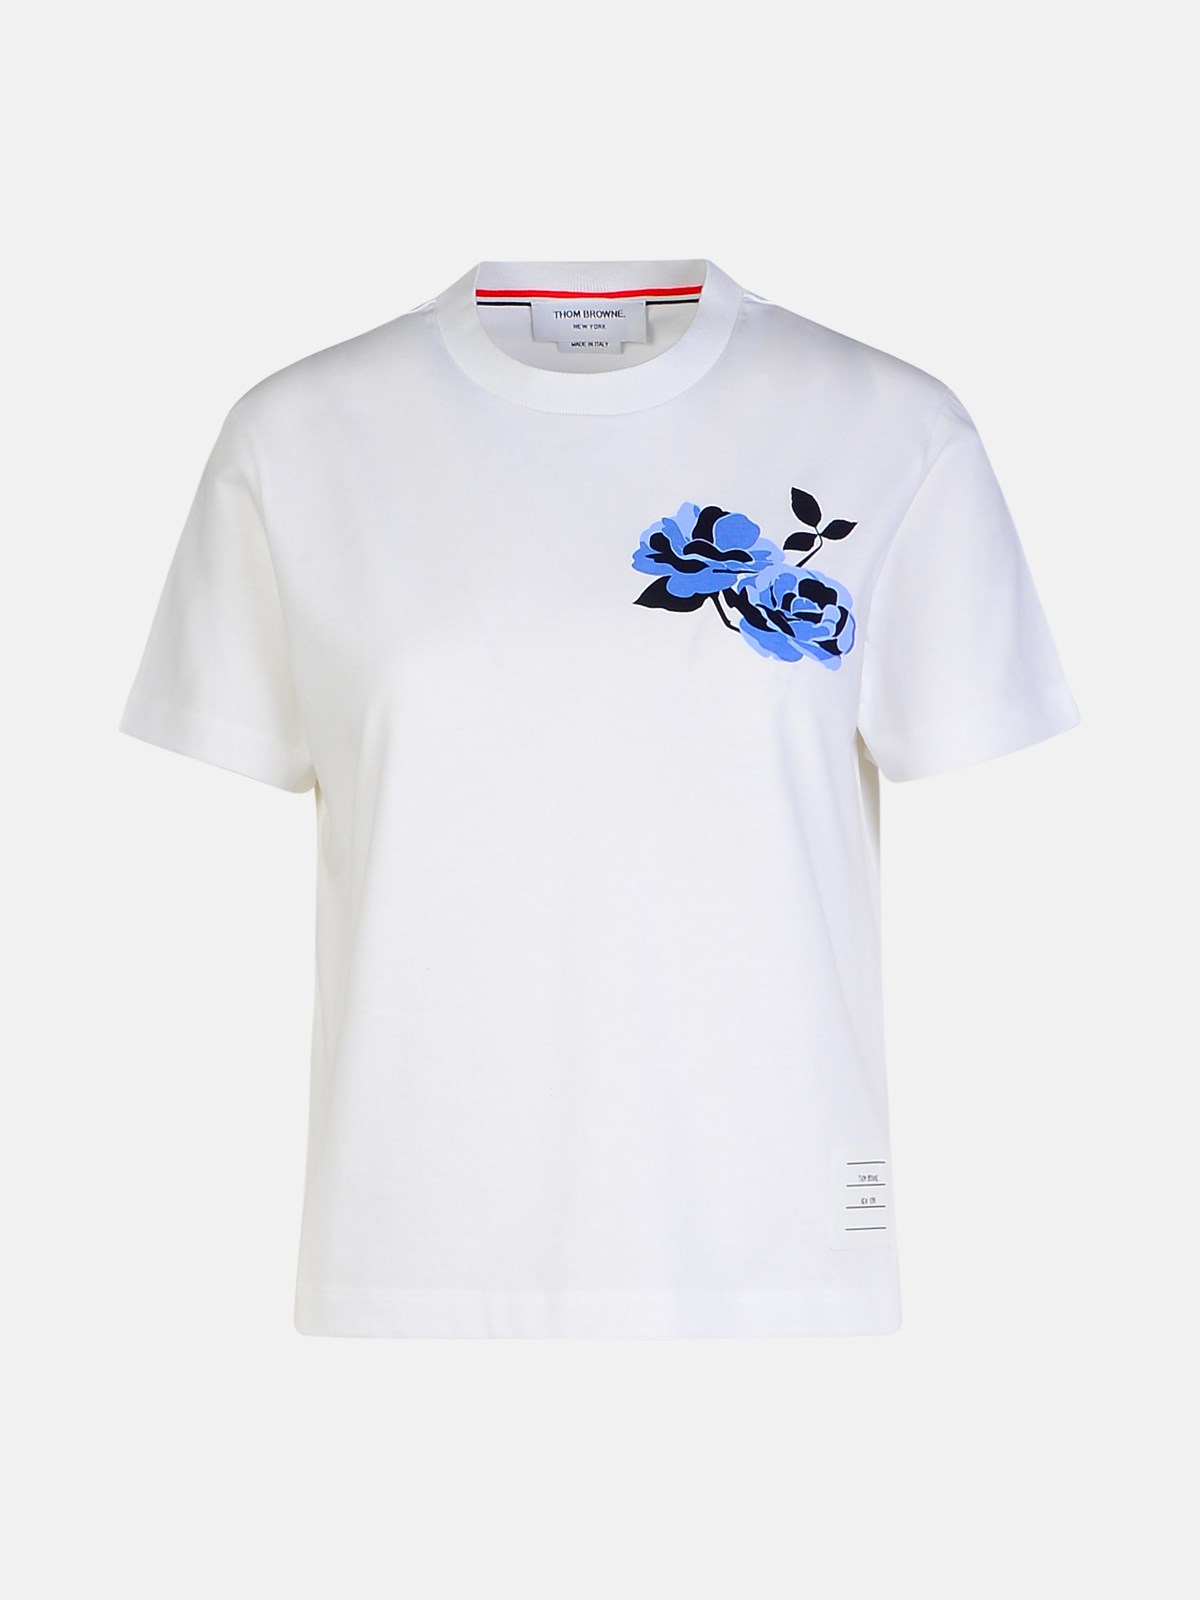 Thom Browne Kids' 'rose' White Cotton T-shirt